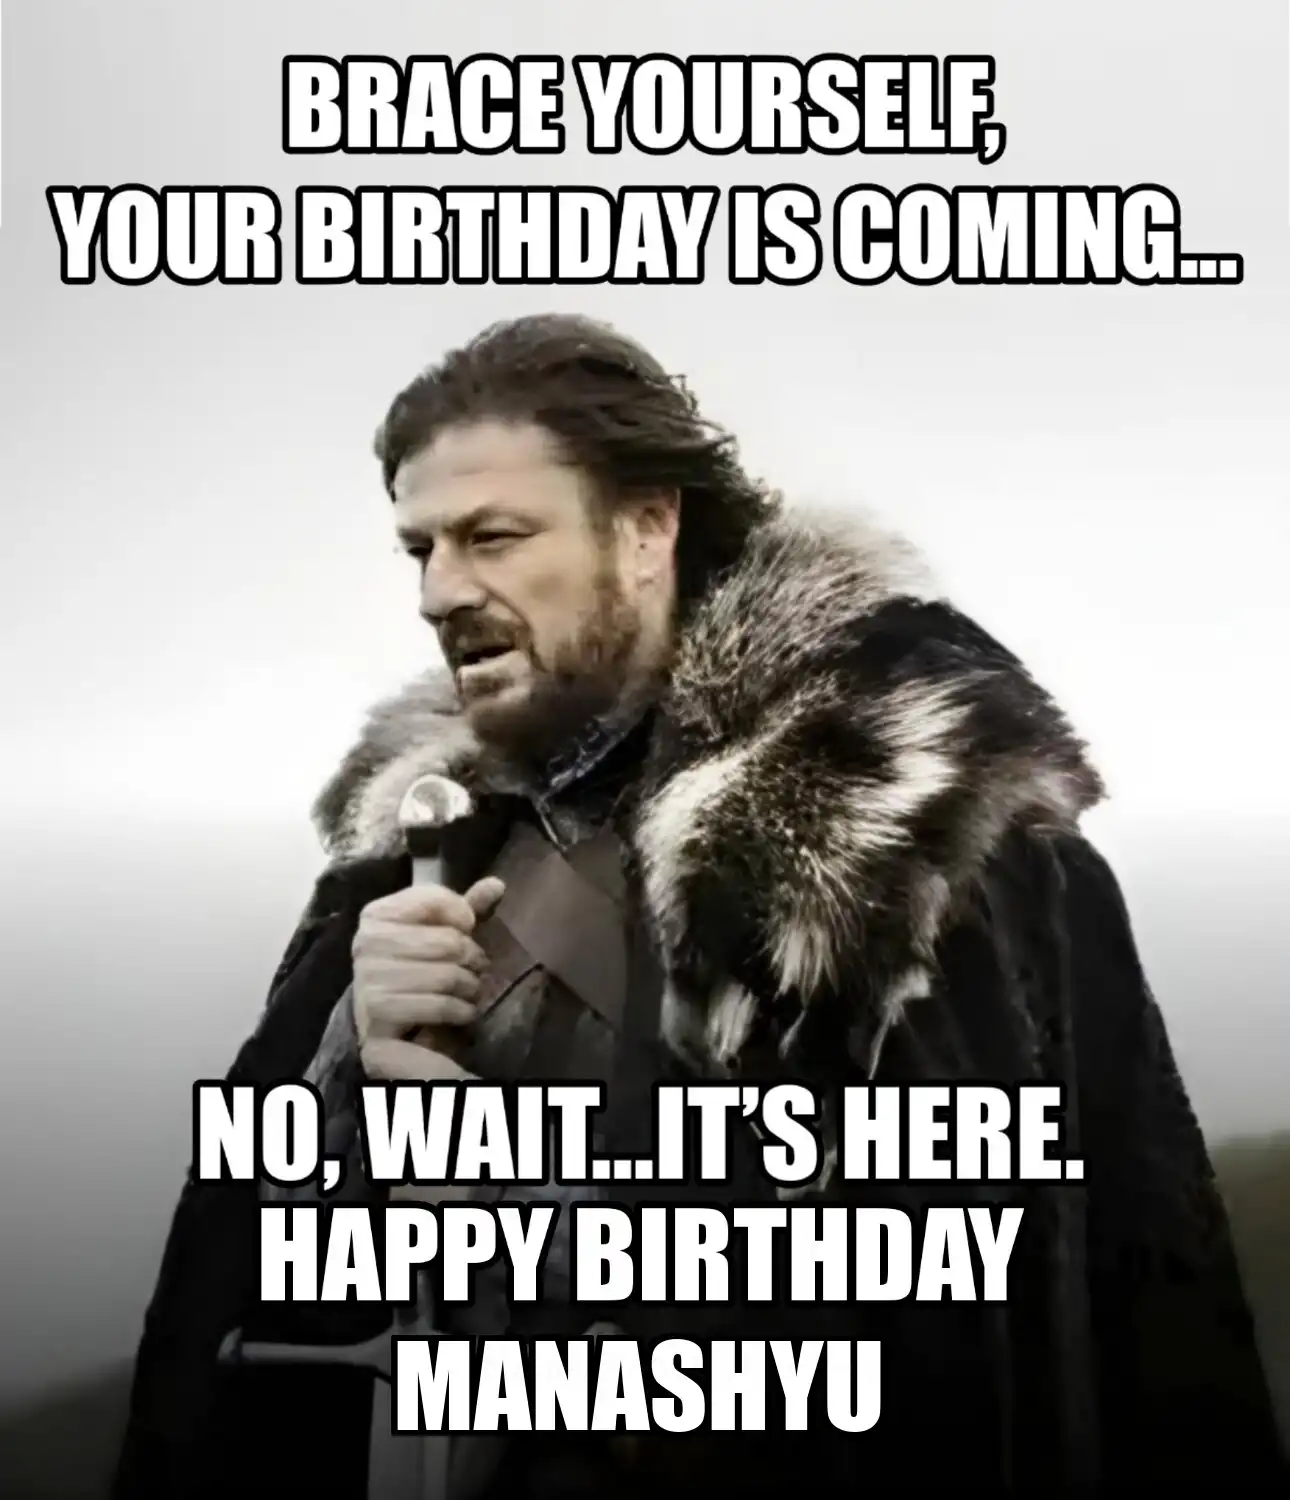 Happy Birthday Manashyu Brace Yourself Your Birthday Is Coming Meme